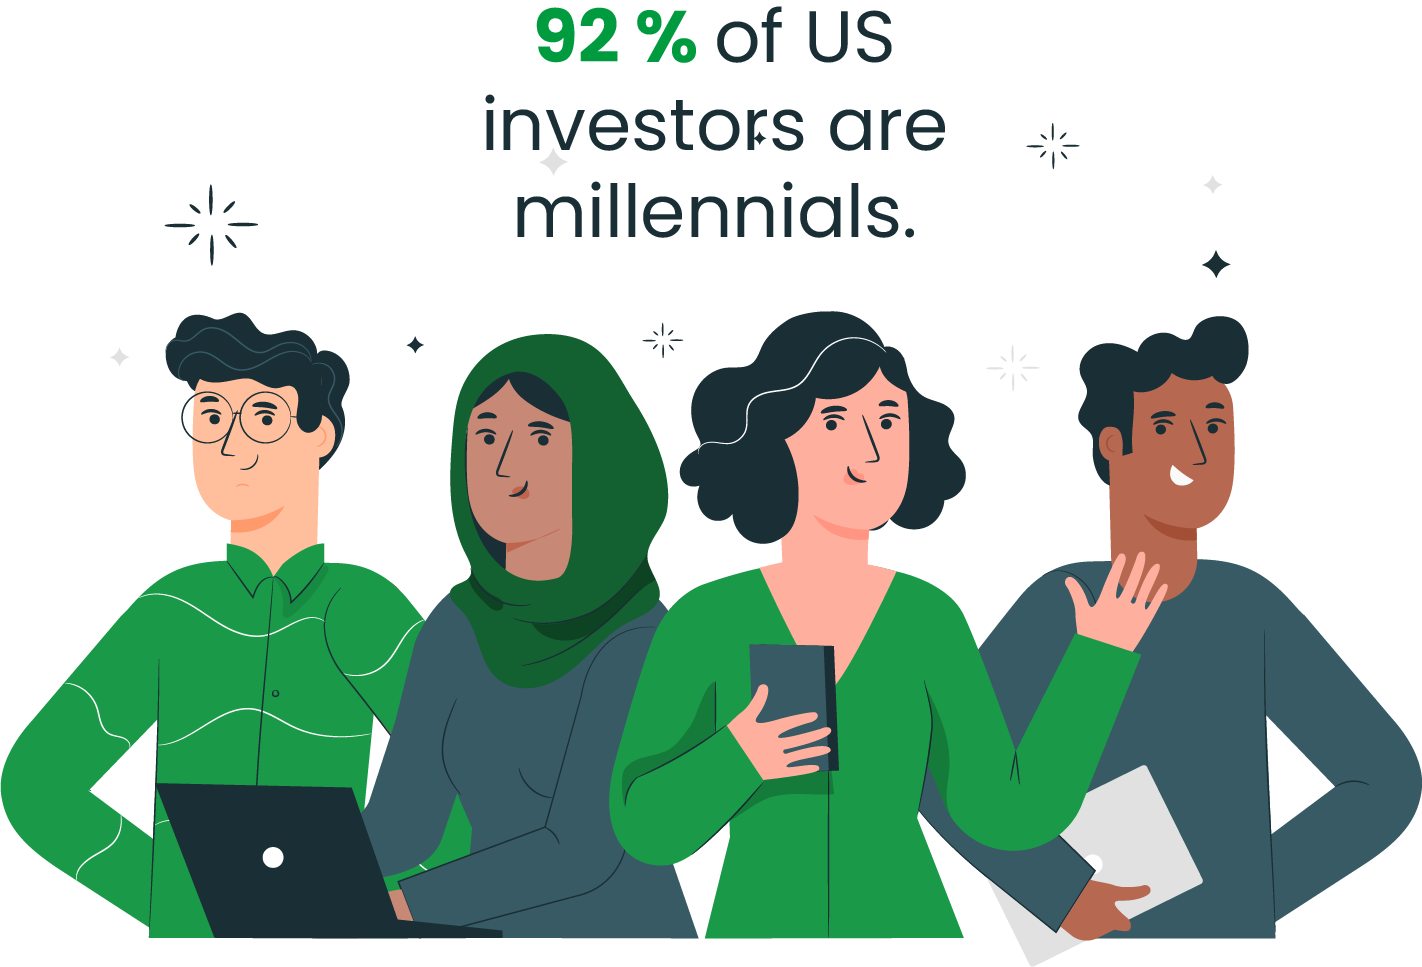 92 % of US investors are millennials1